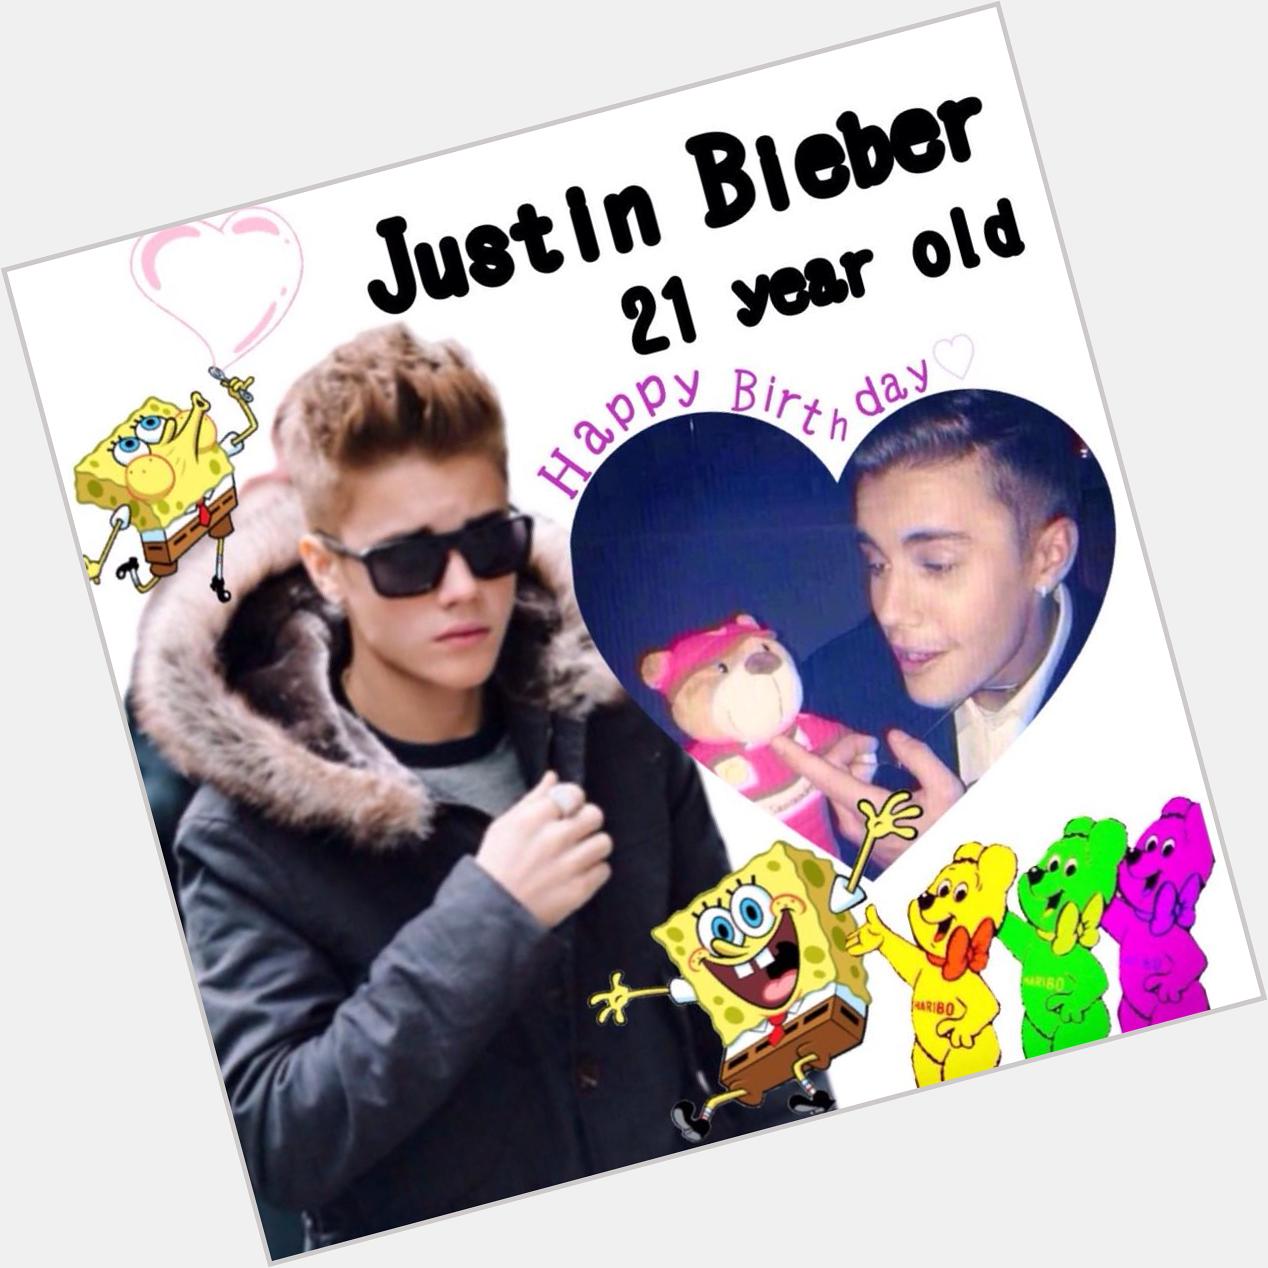  Justin Bieber 21 year old Happy Birthday                           I love Justin  